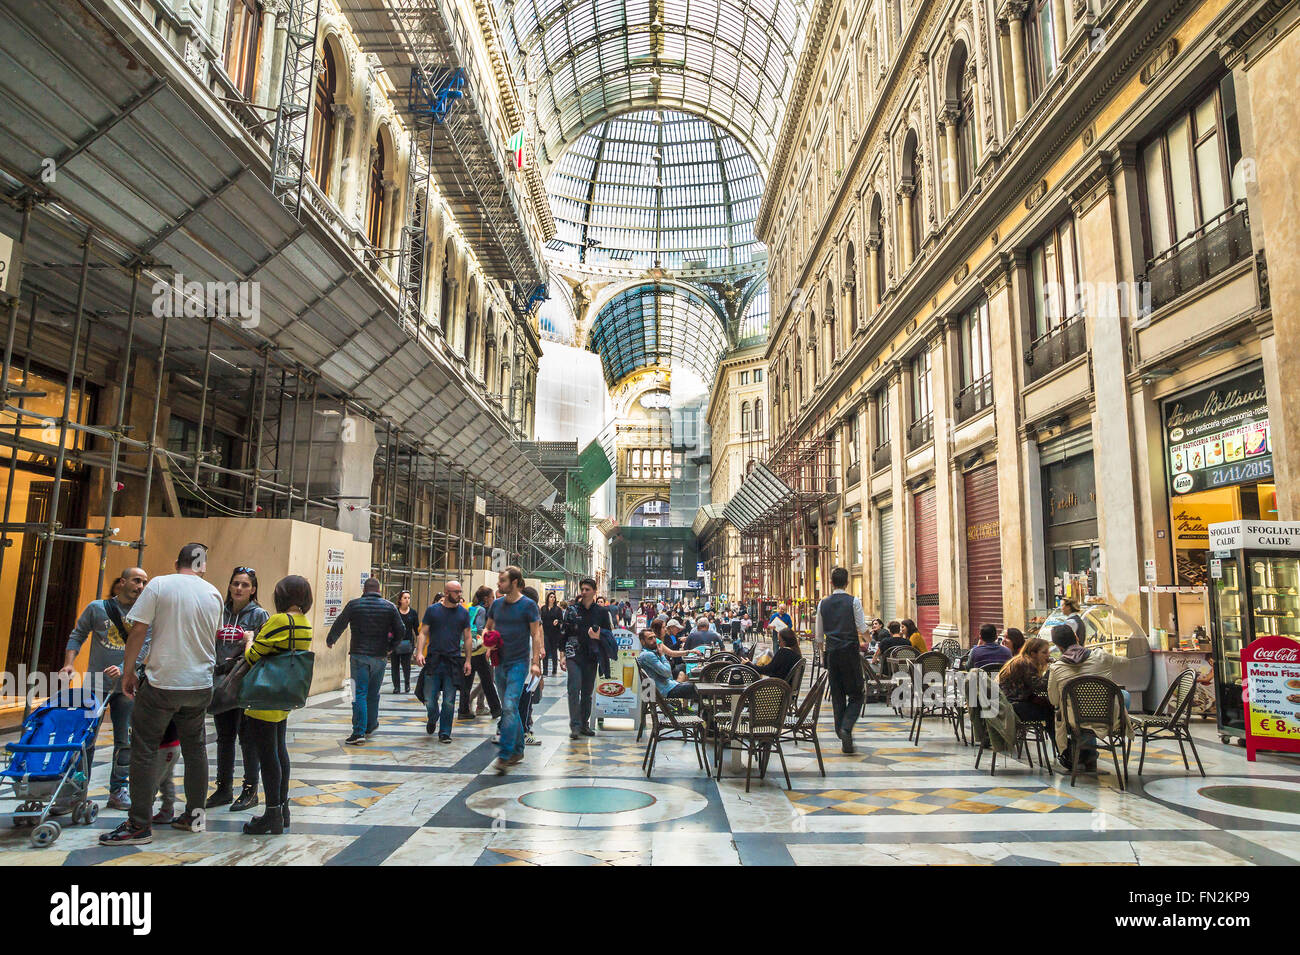 NAPLES, ITALY - NOVEMBER 7, 2015. Galleria Umberto I,famous public shopping gallery in Naples, southern Italy. Stock Photo